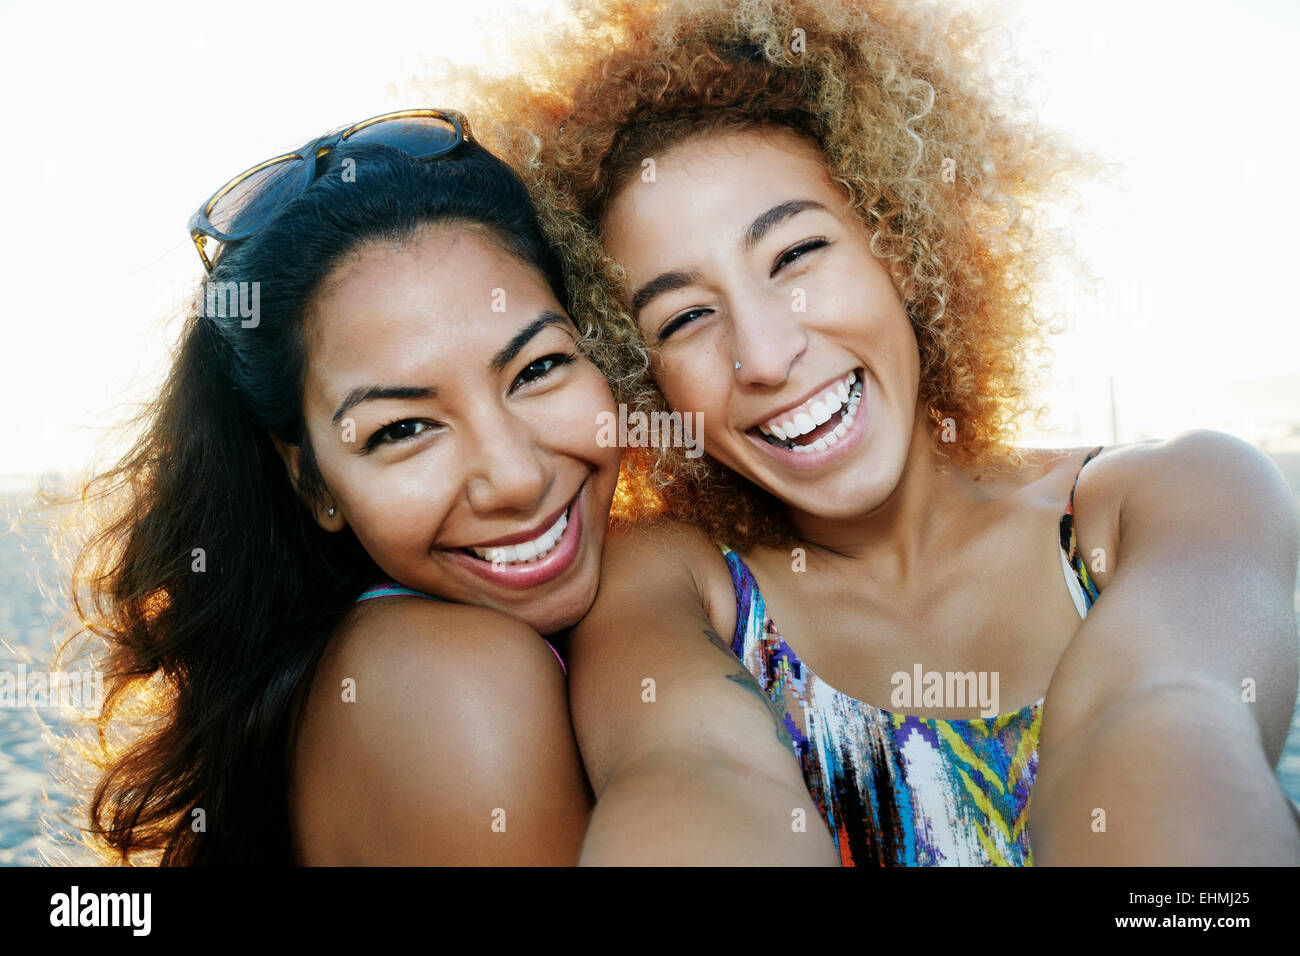 Smiling Hispanic women taking selfie together outdoors Stock Photo